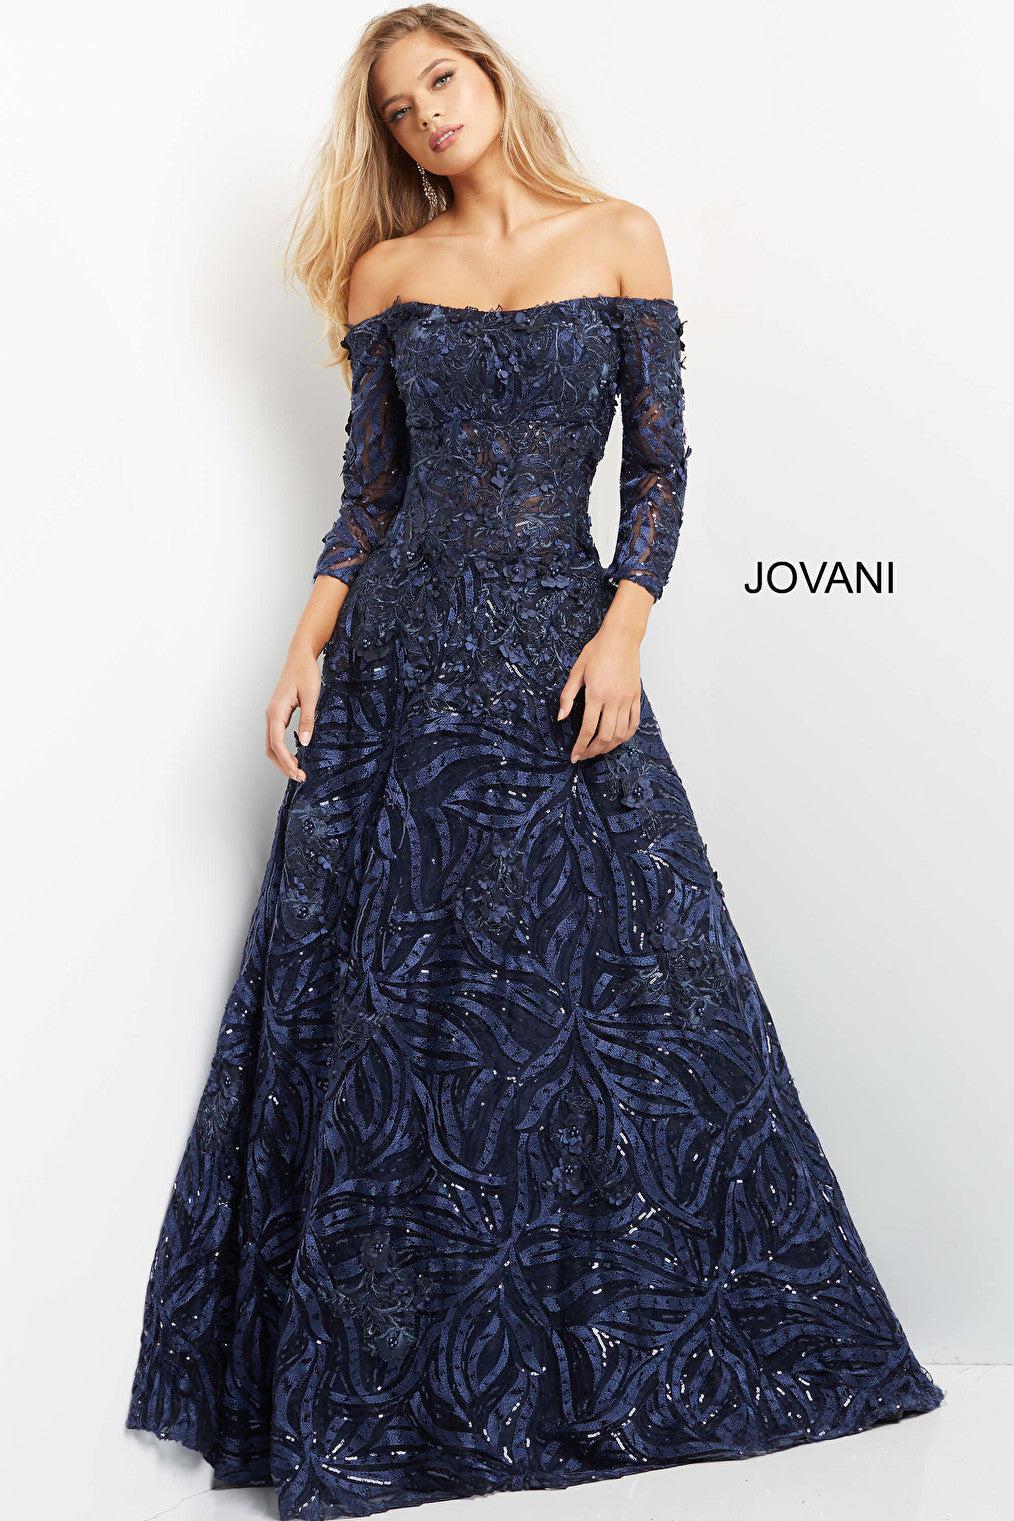 jovani navy dress 06792